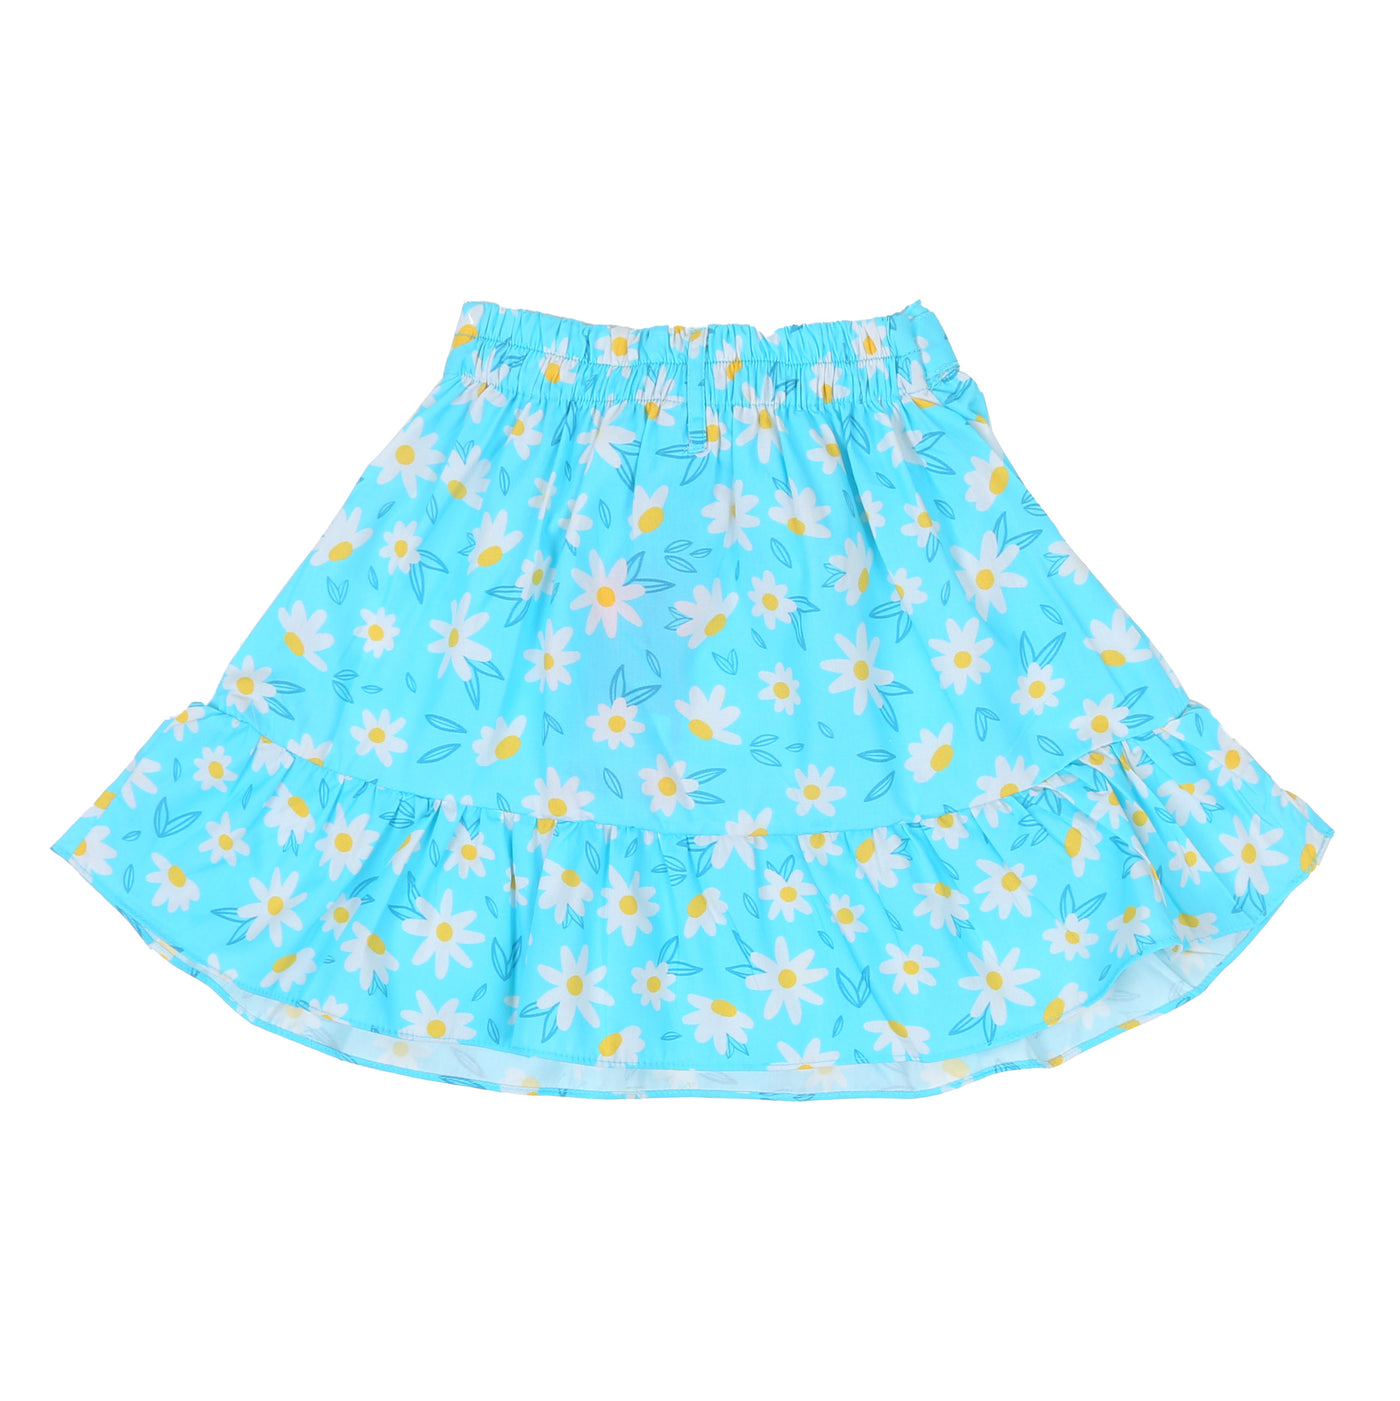 Infant Girls Digital Print Short Skirt Flora - AQUA